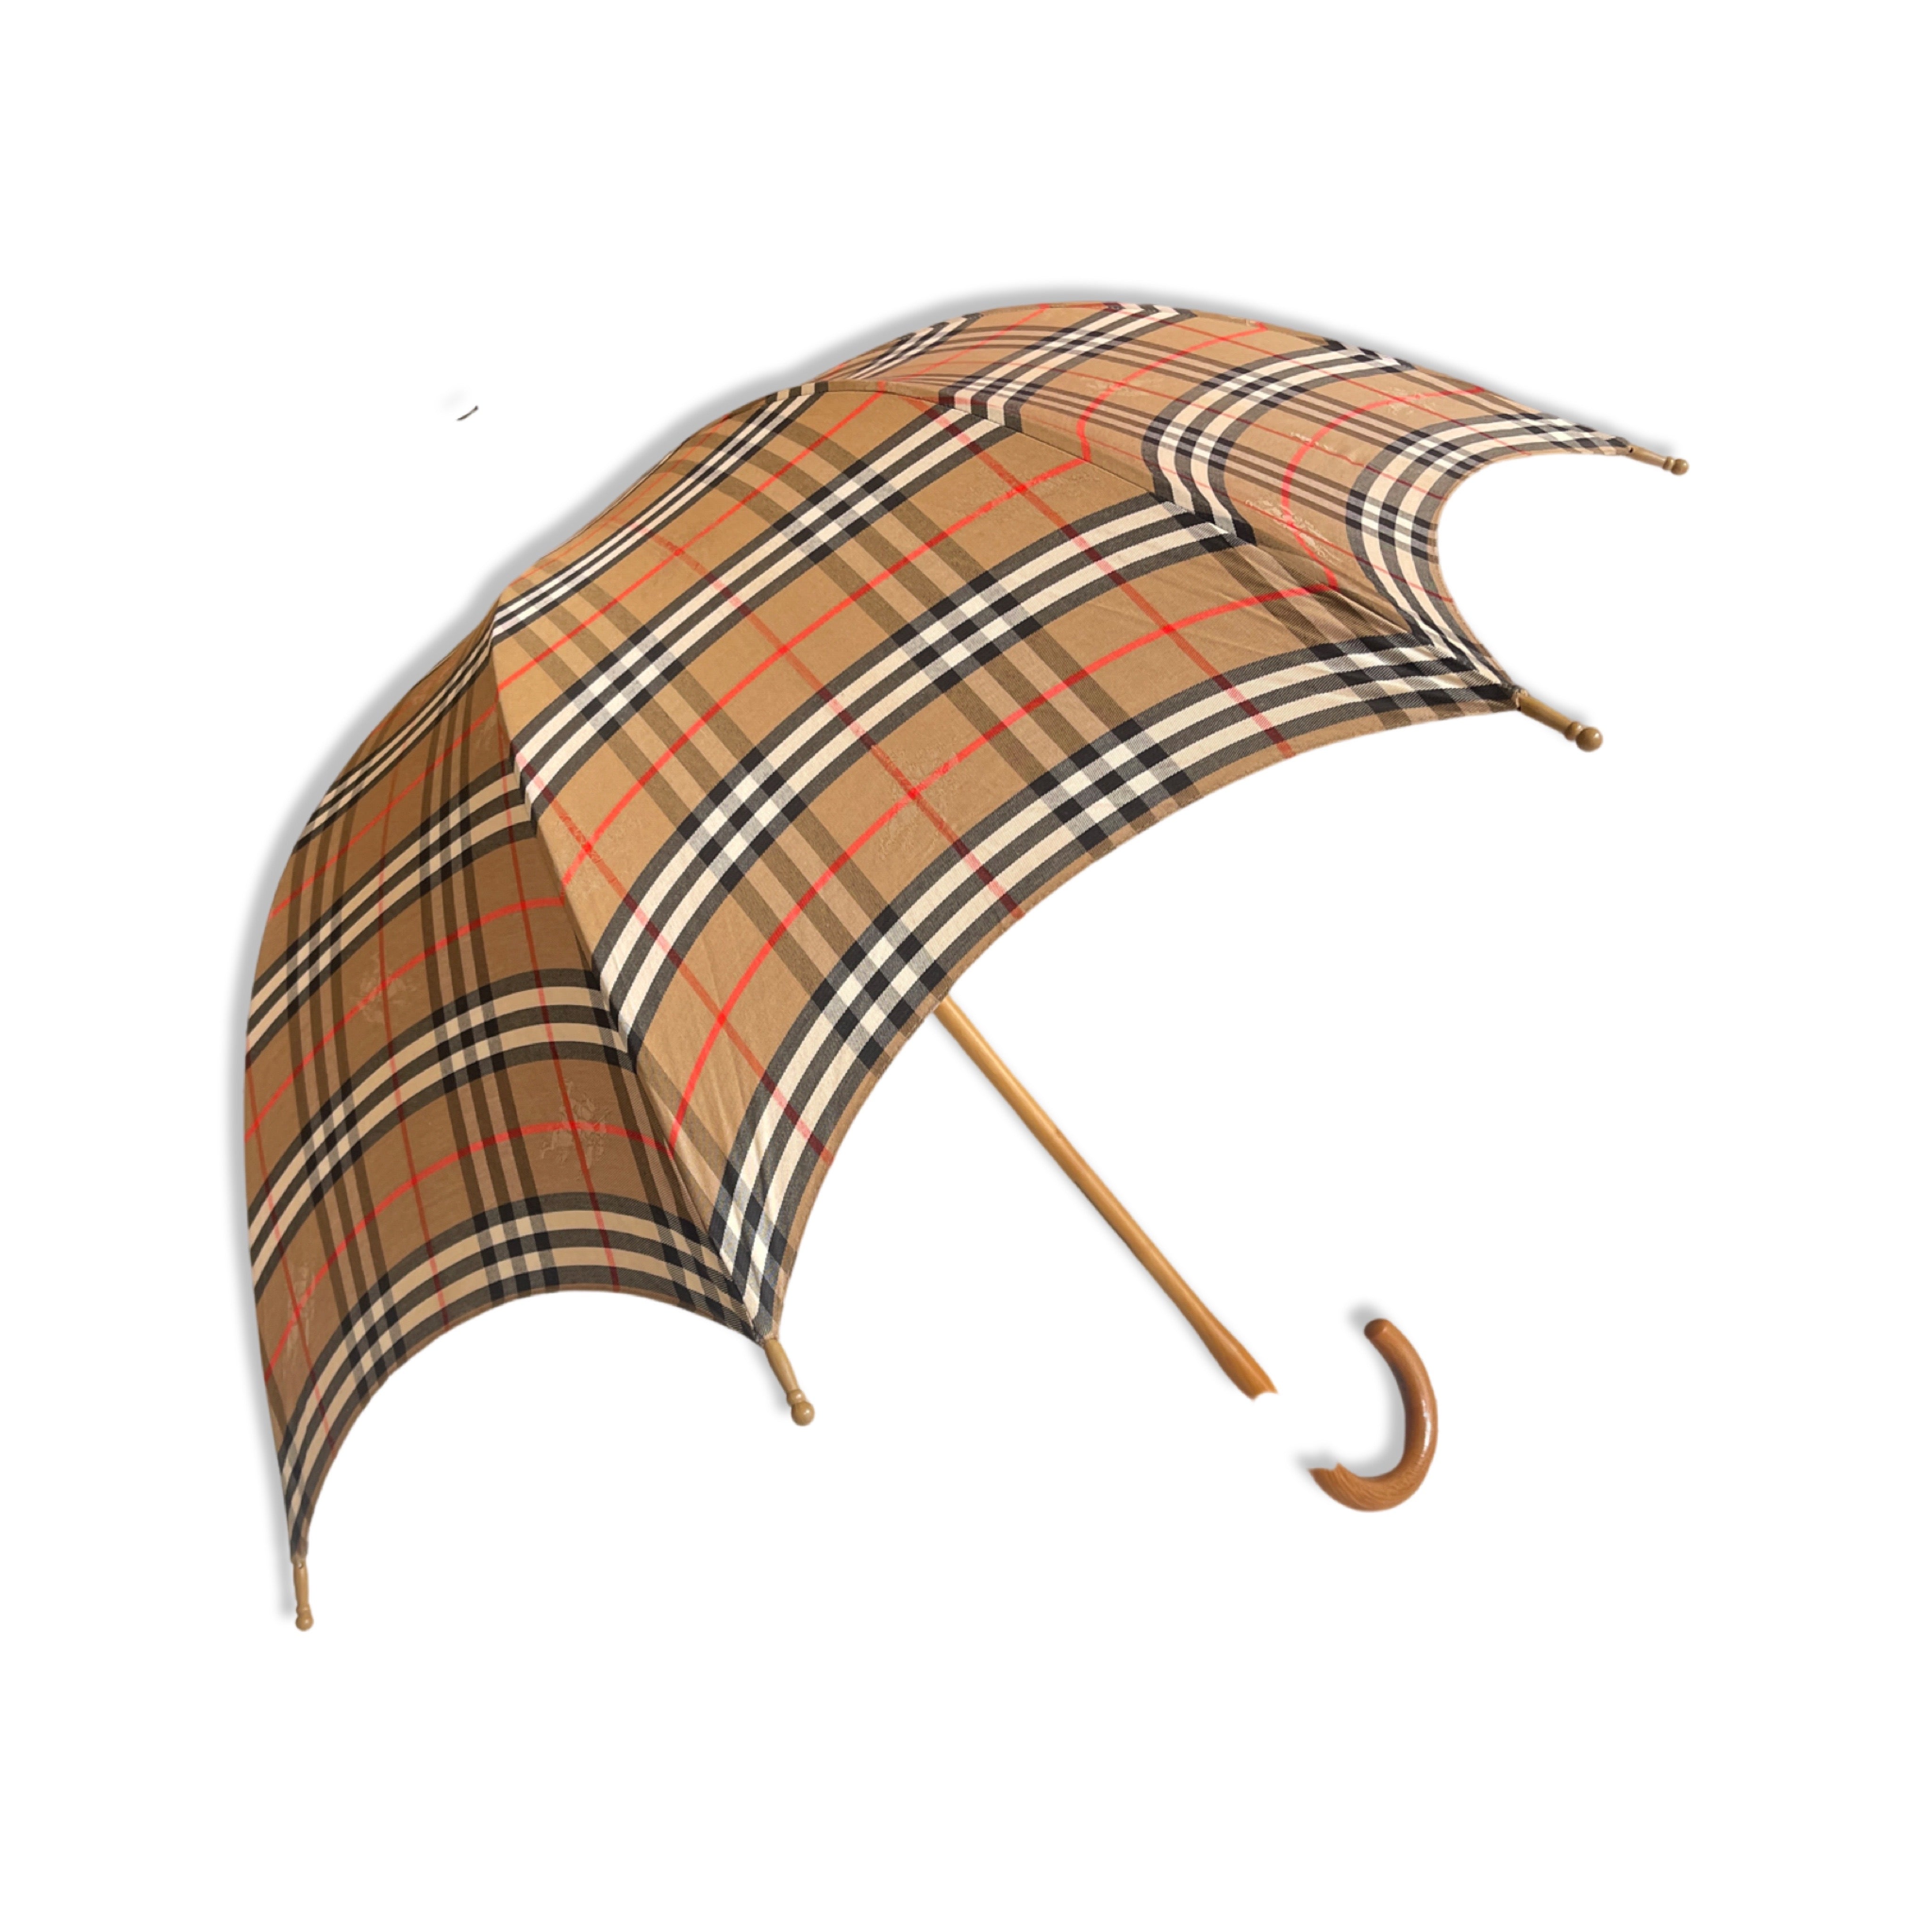 Burberry umbrella.